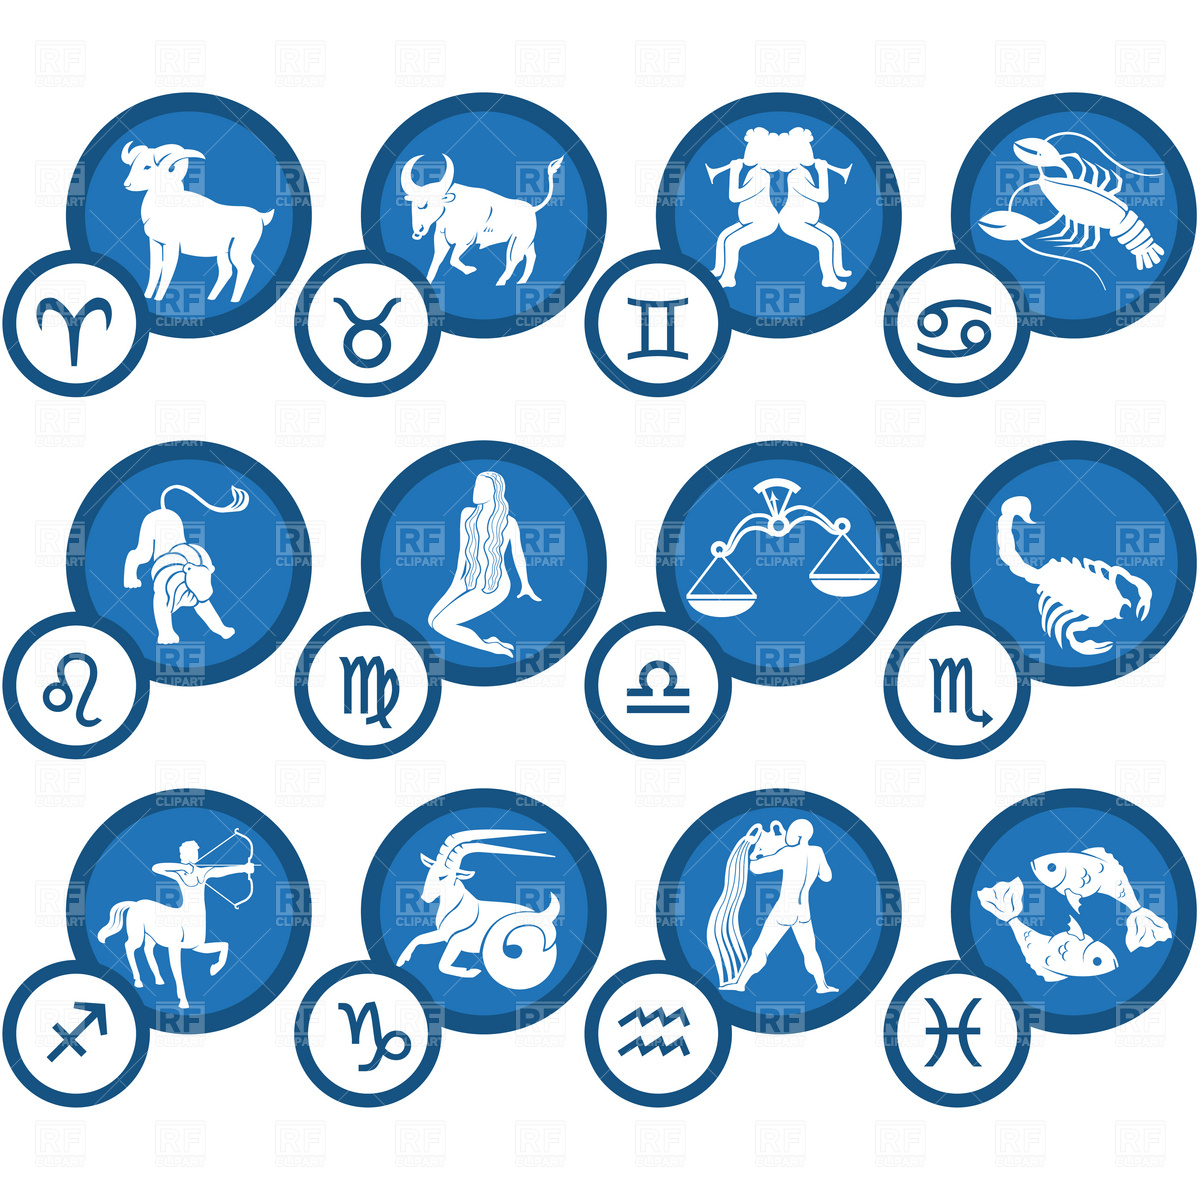 Zodiac signs and symbols, Signs, Symbols, Maps, download Royalty ...